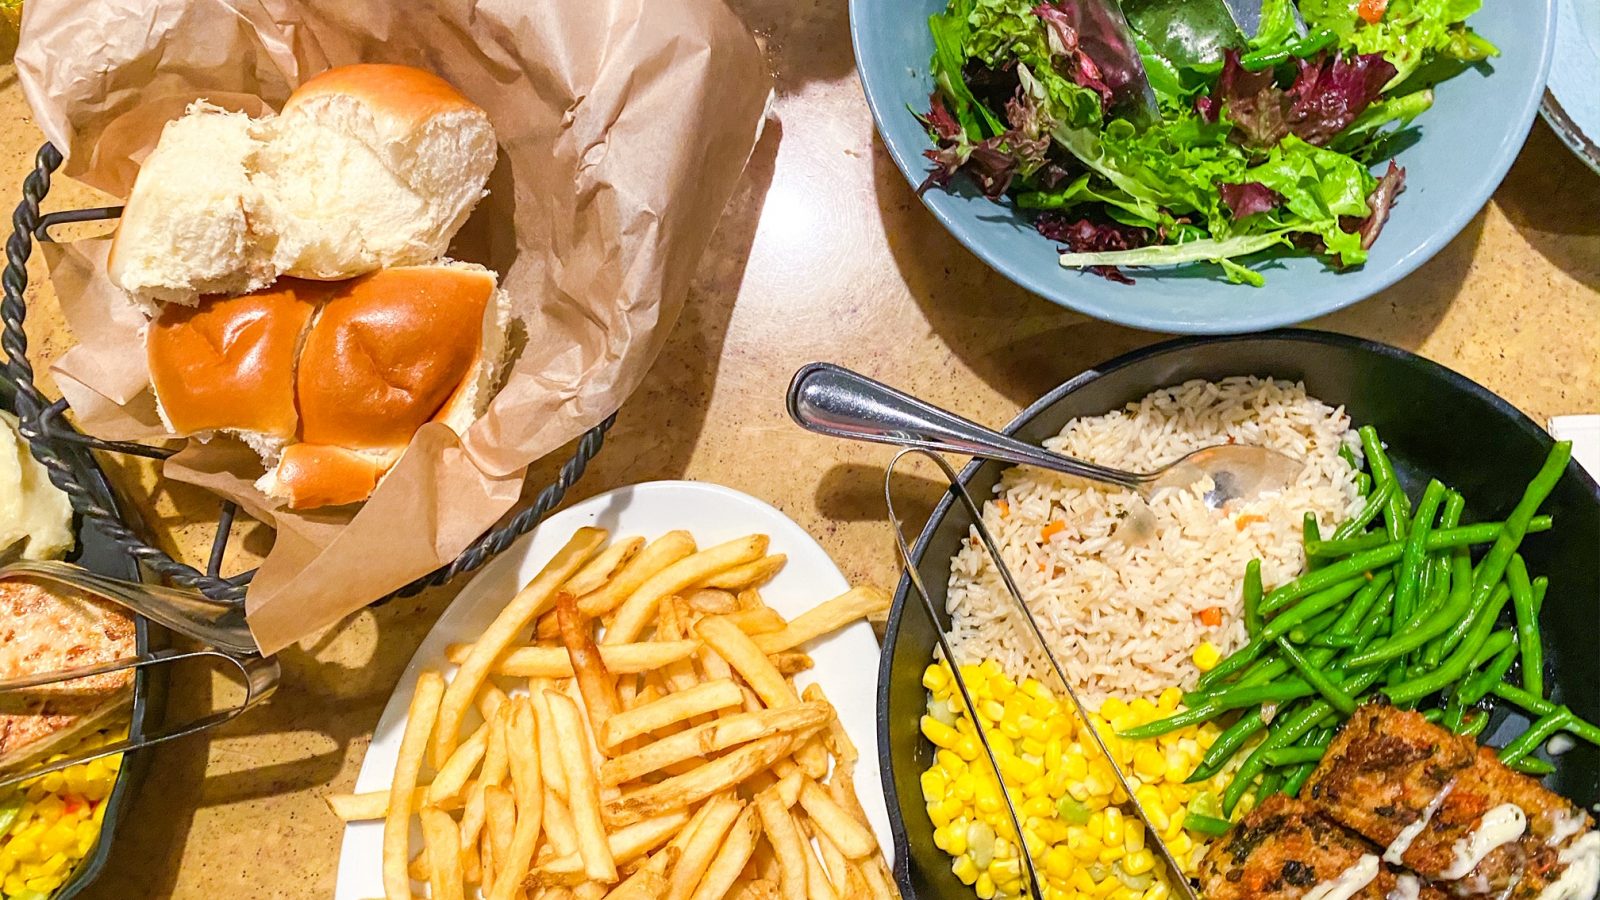 full vegan meal from above at Disney Garden Grill Restaurant